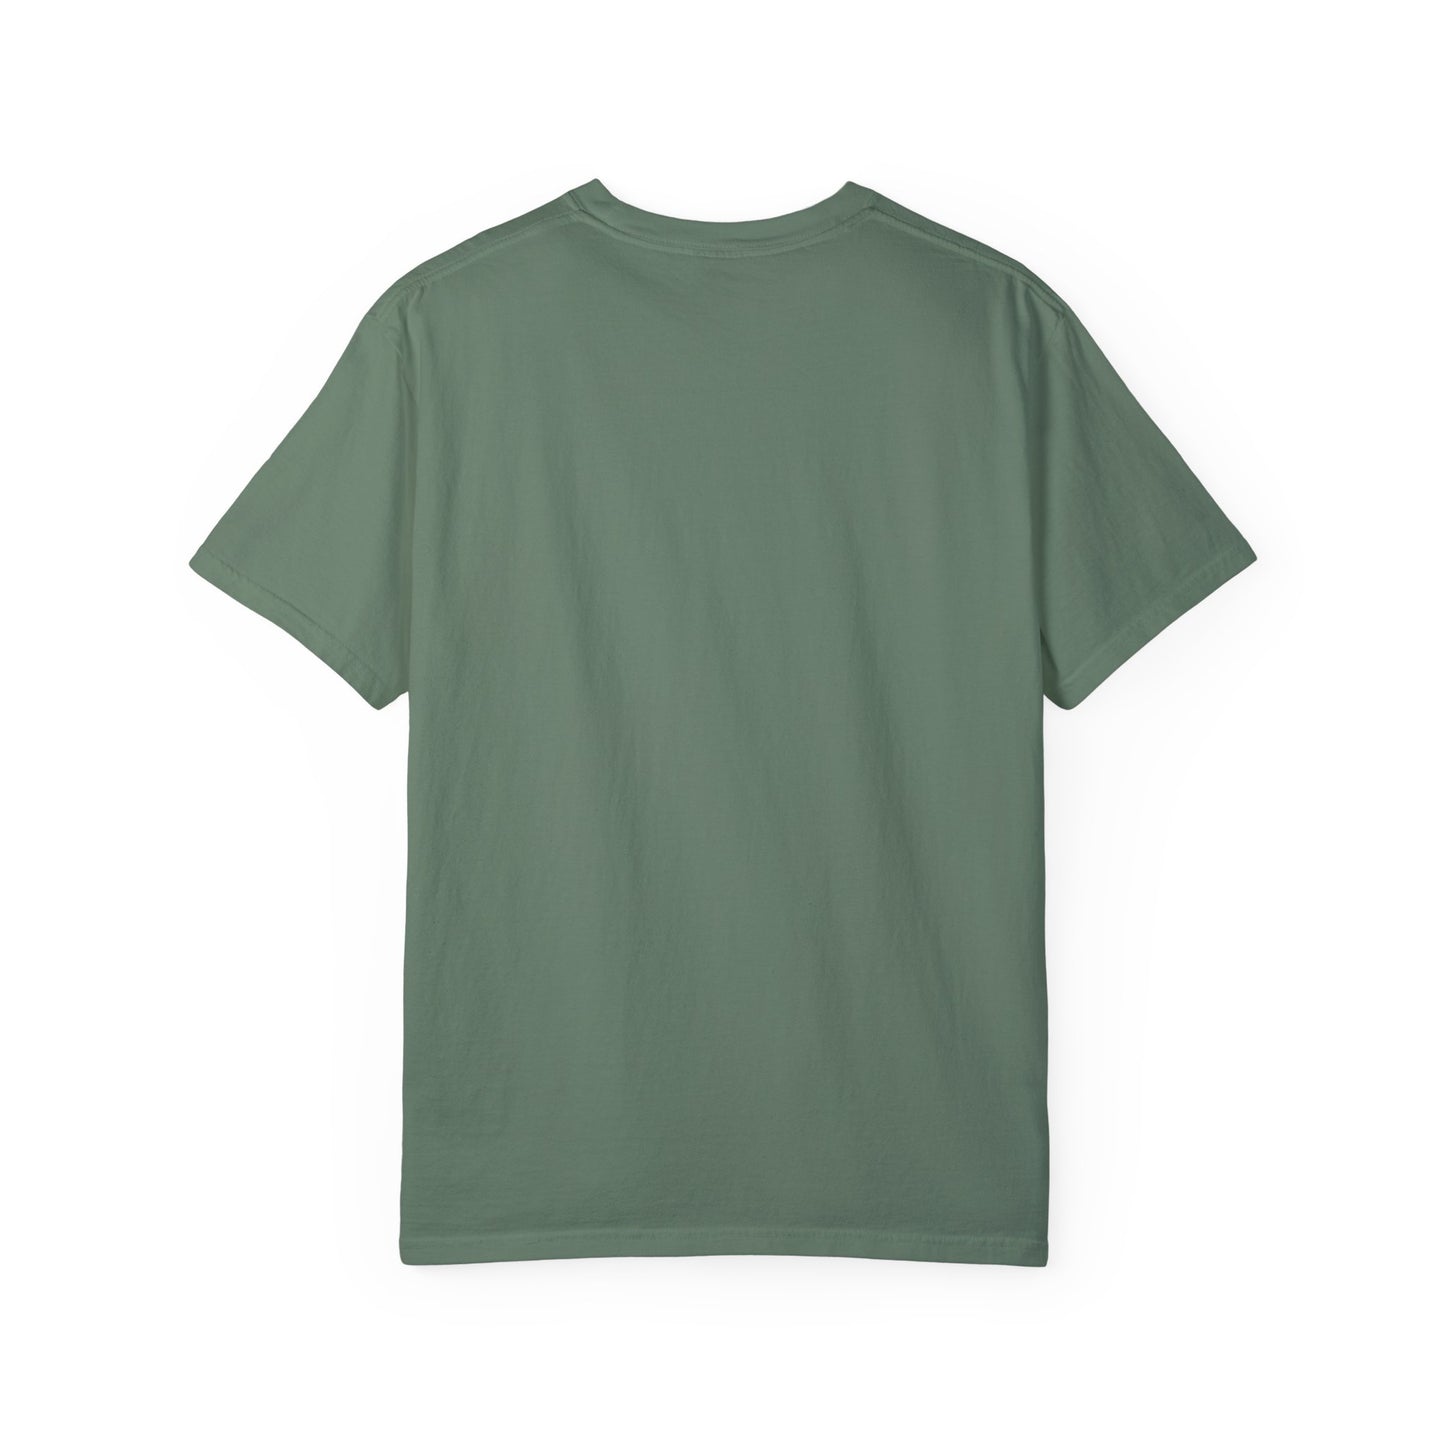 Nacho Valentine, Funny Valentine's Day Shirt, Comfort Colors T-shirt